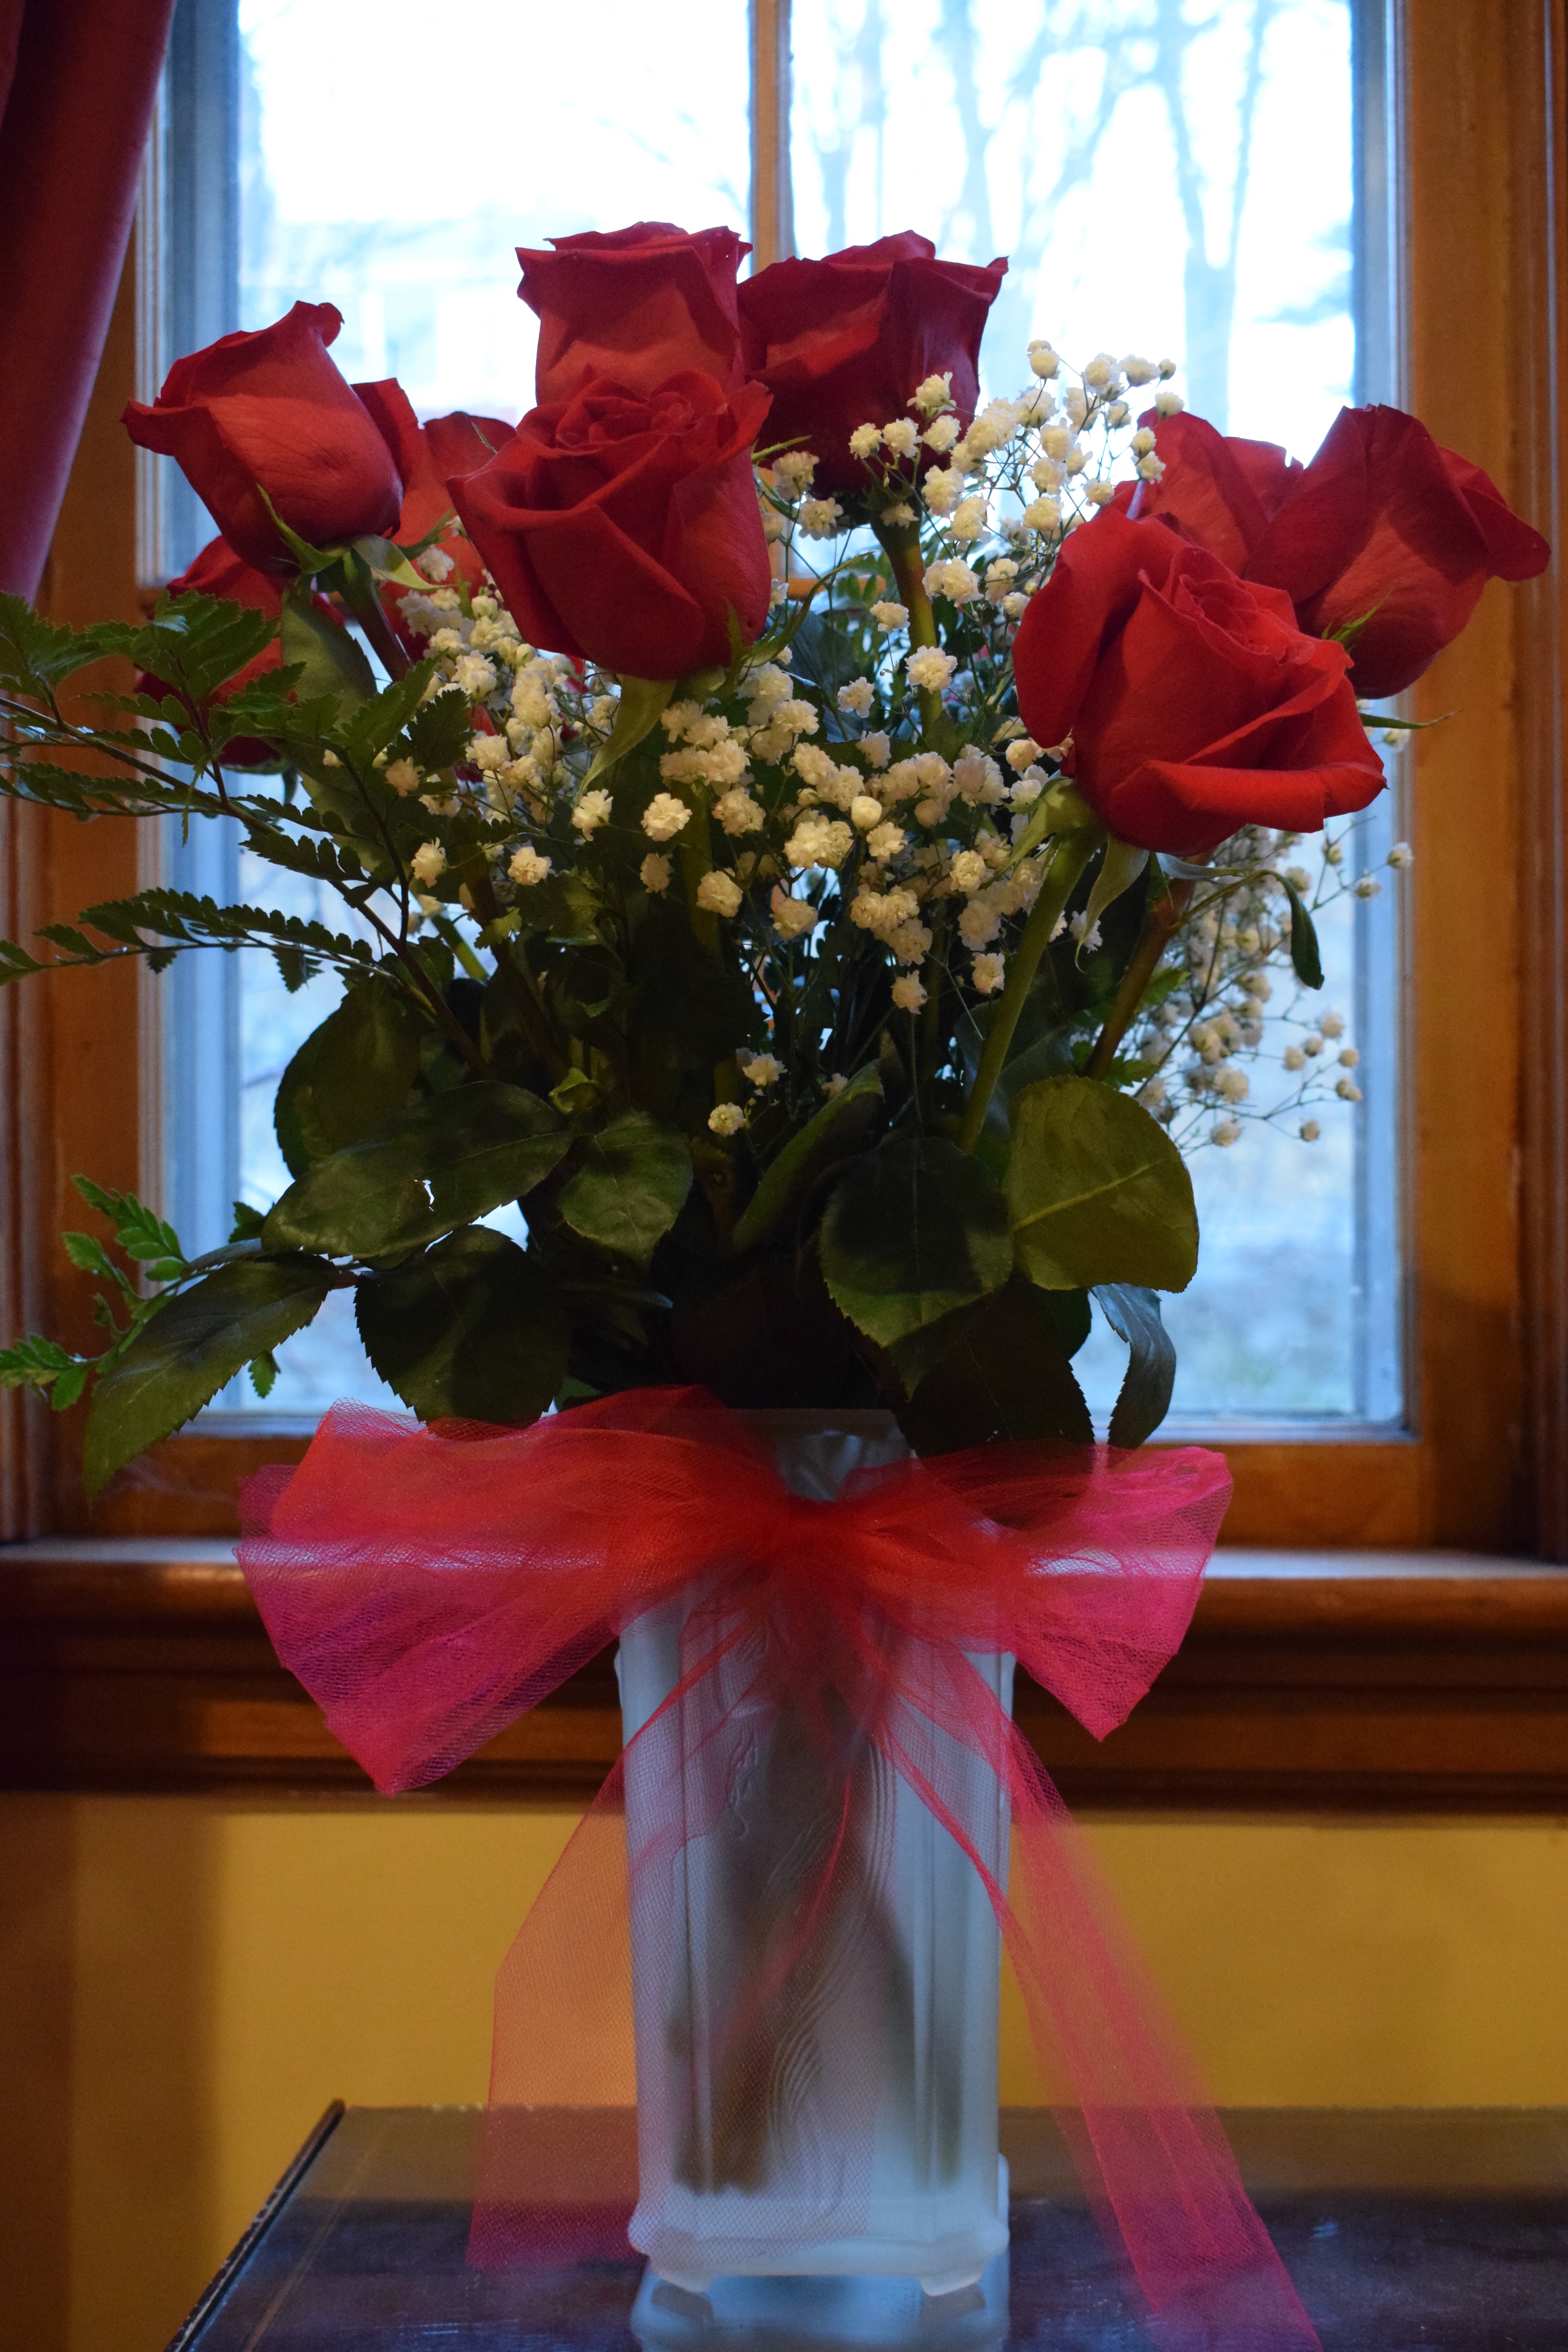 Red Roses in a Vase, Favorite Things Number 10